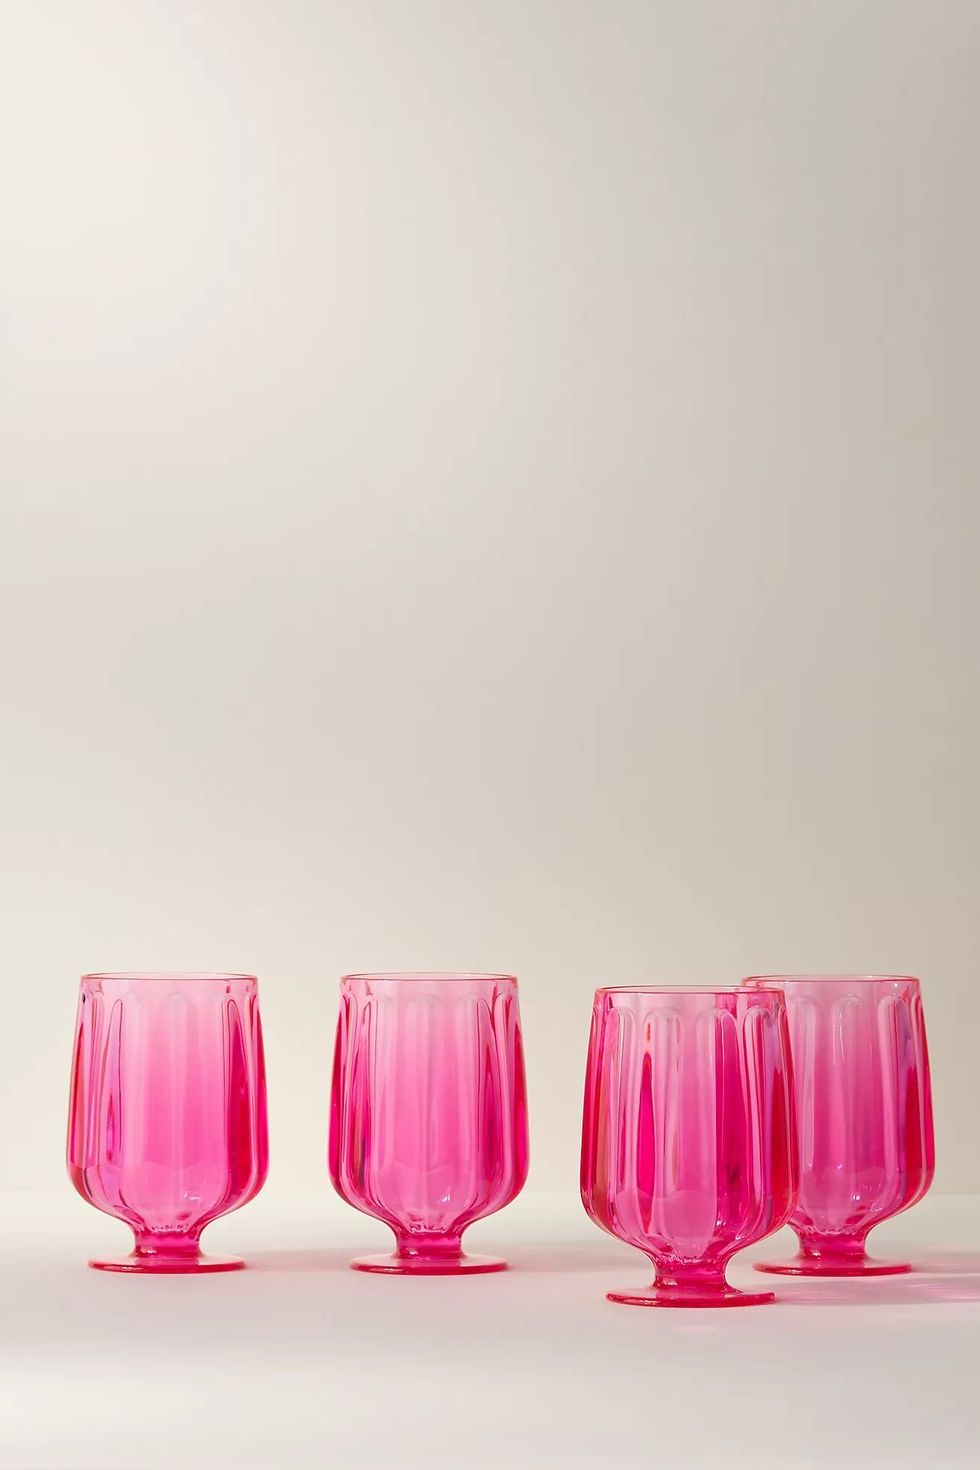 Set of 4 Lucia Goblet Wine Glasses